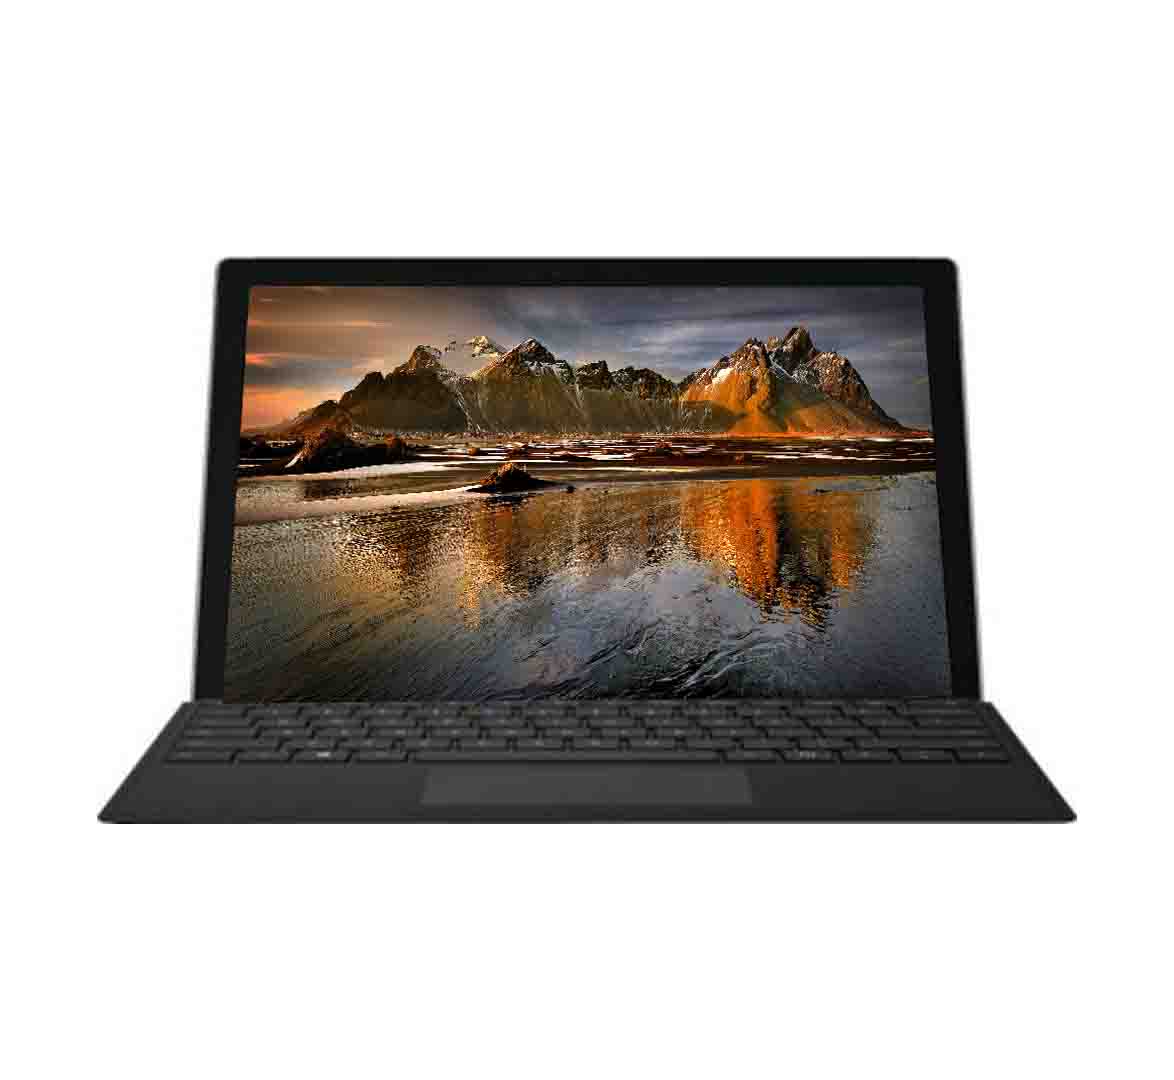 Microsoft Surface 1796 Business Laptop, Intel Core i5-1st Gen. CPU, 4GB RAM, 128GB SSD, 12.3 Inch Touchscreen, Windows 10 Pro, Refurbished Laptop